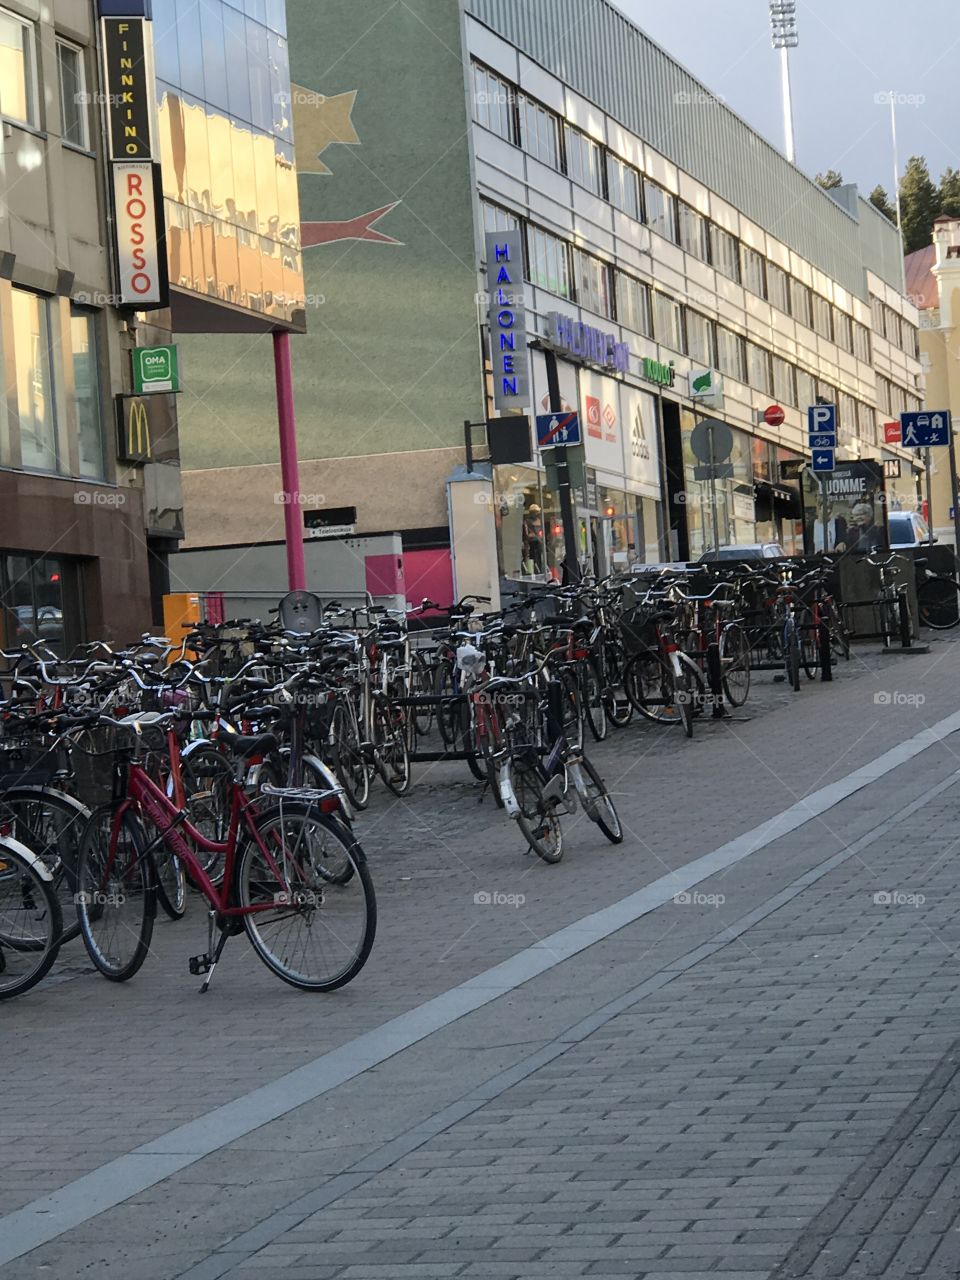 Bikes in Finland